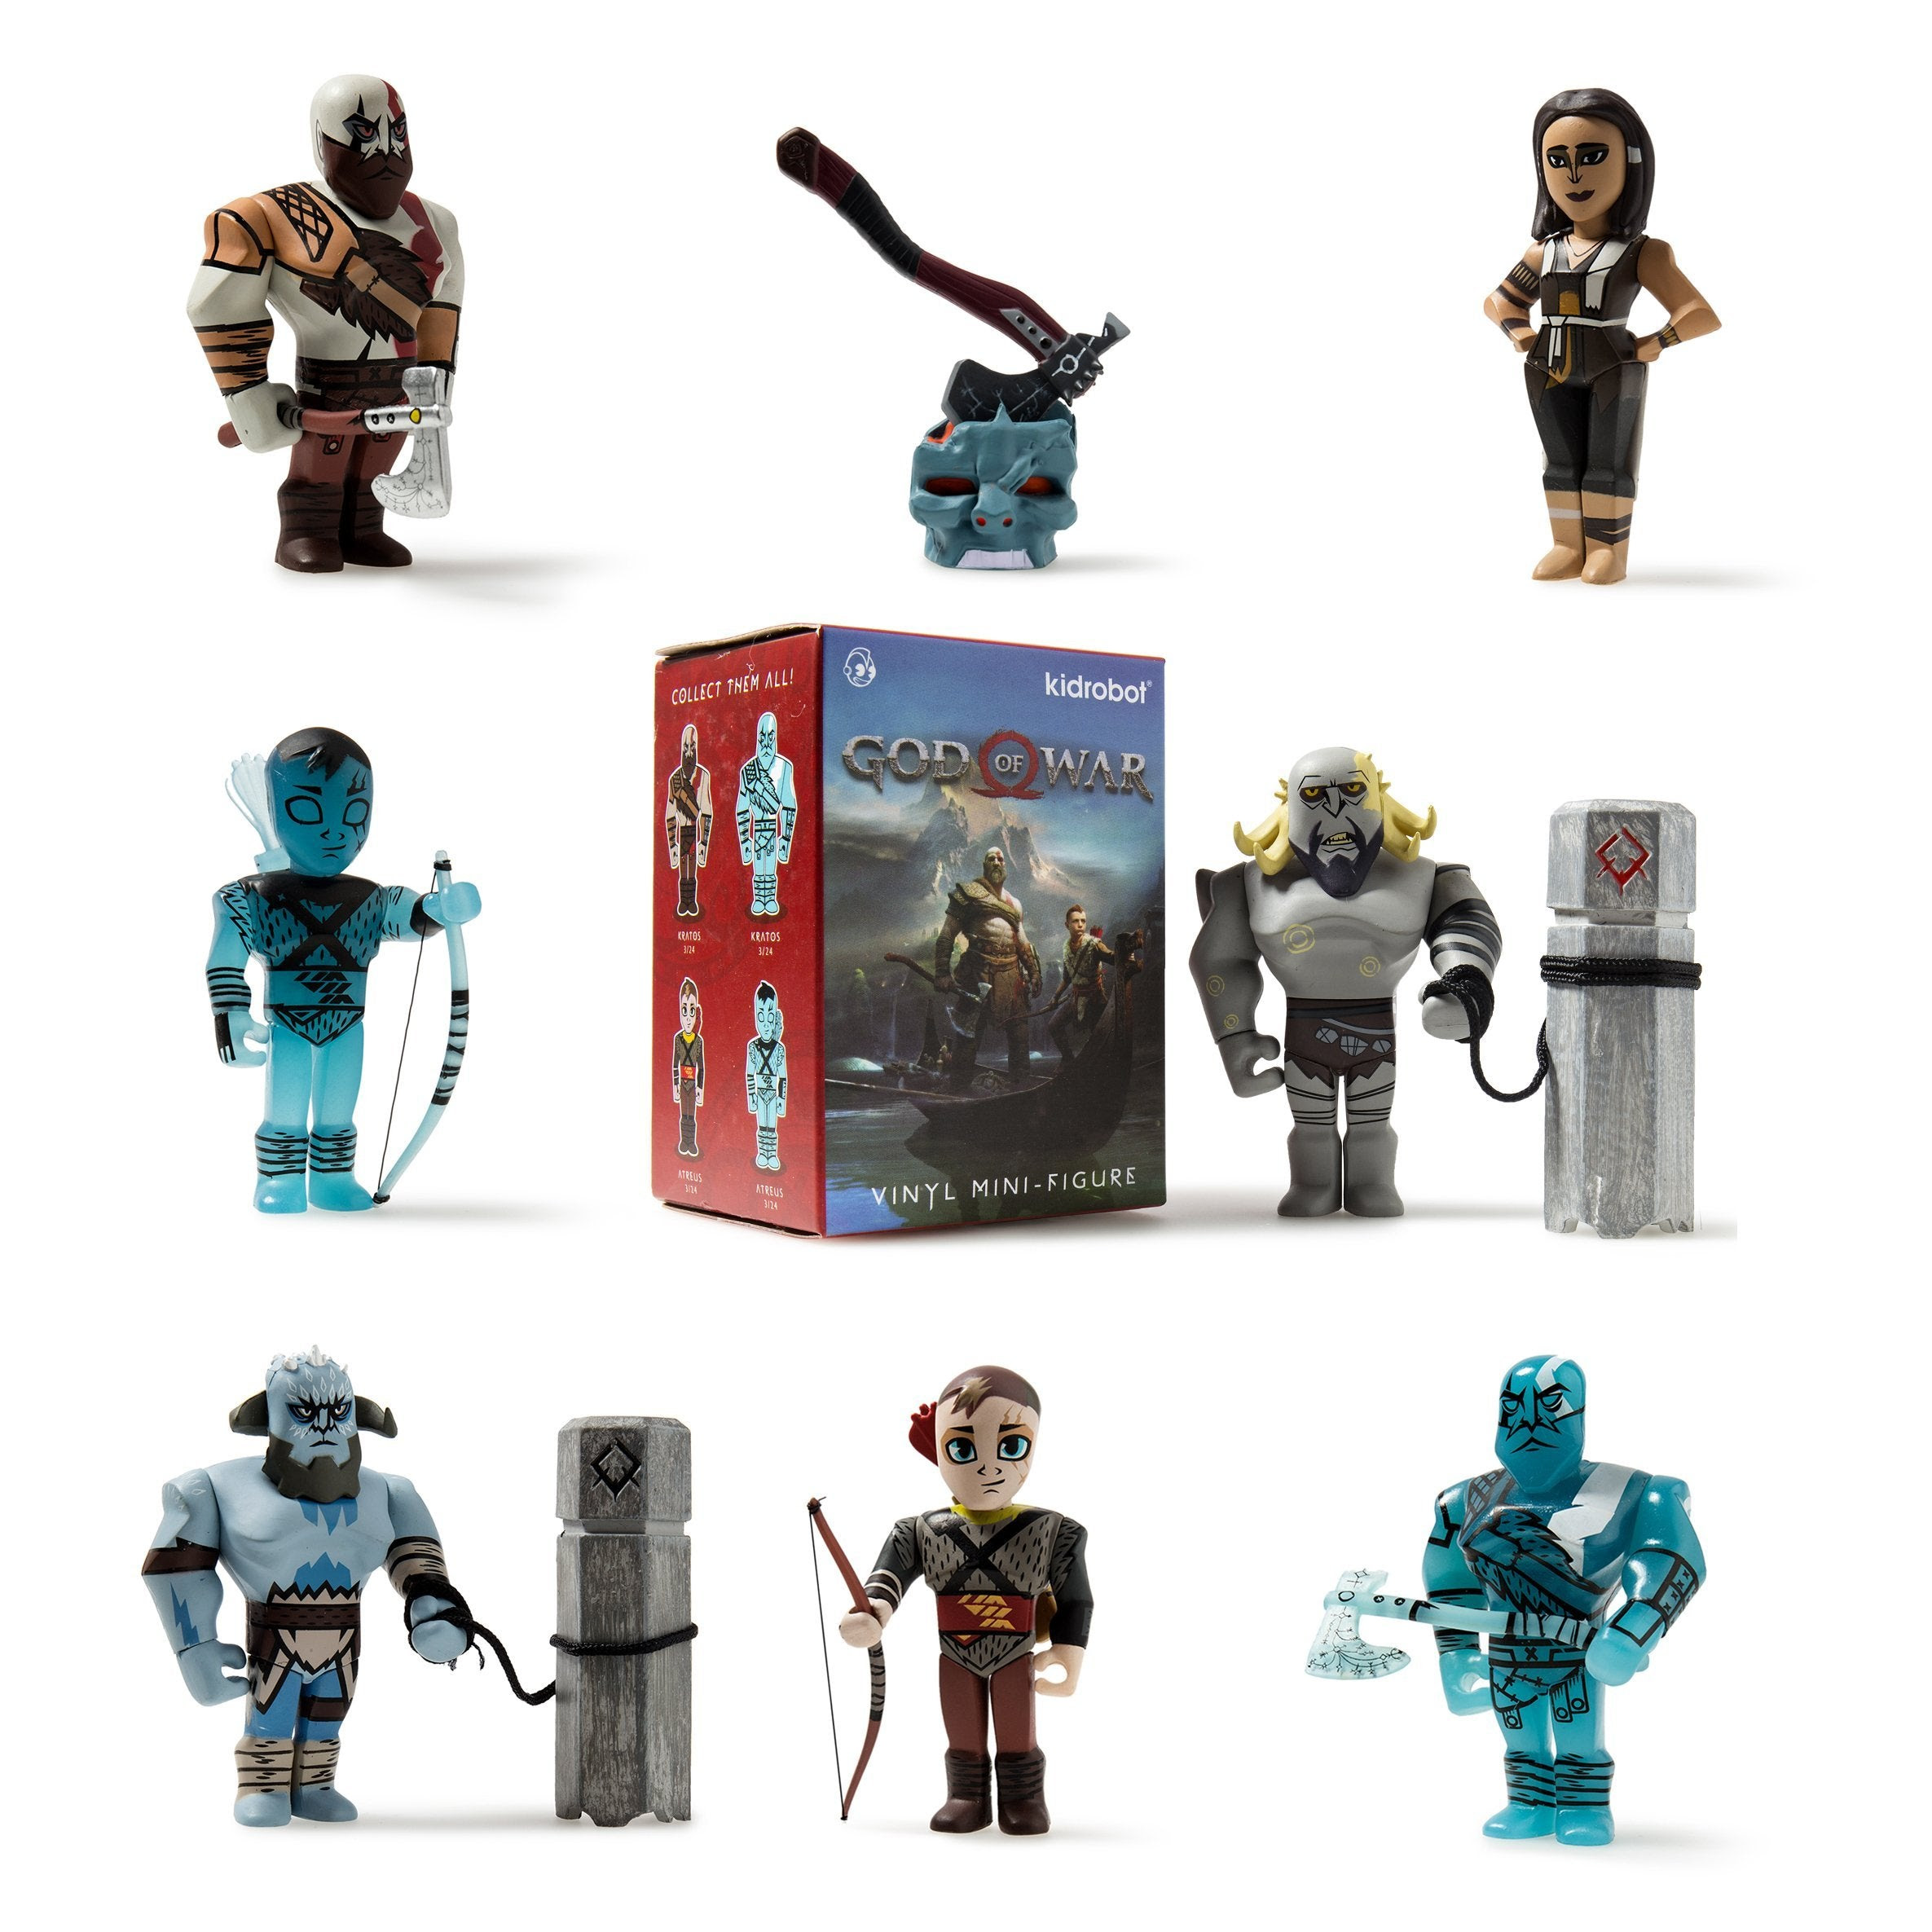 God of War 3" Blind Box Mini Series by Kidrobot